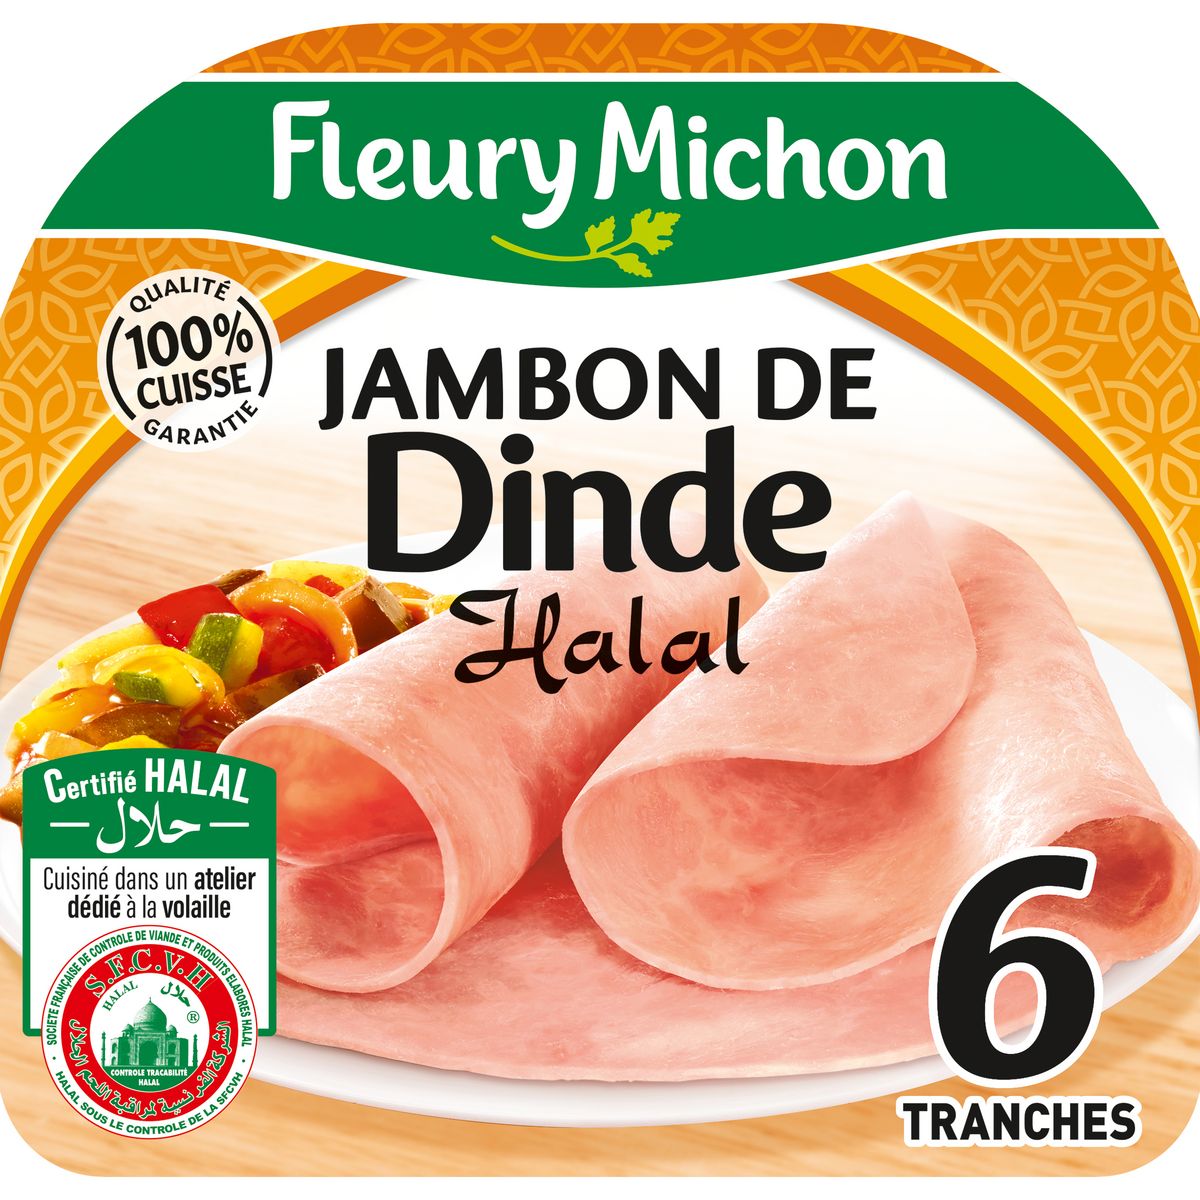 FLEURY MICHON Jambon de dinde halal 6 tranches 180g